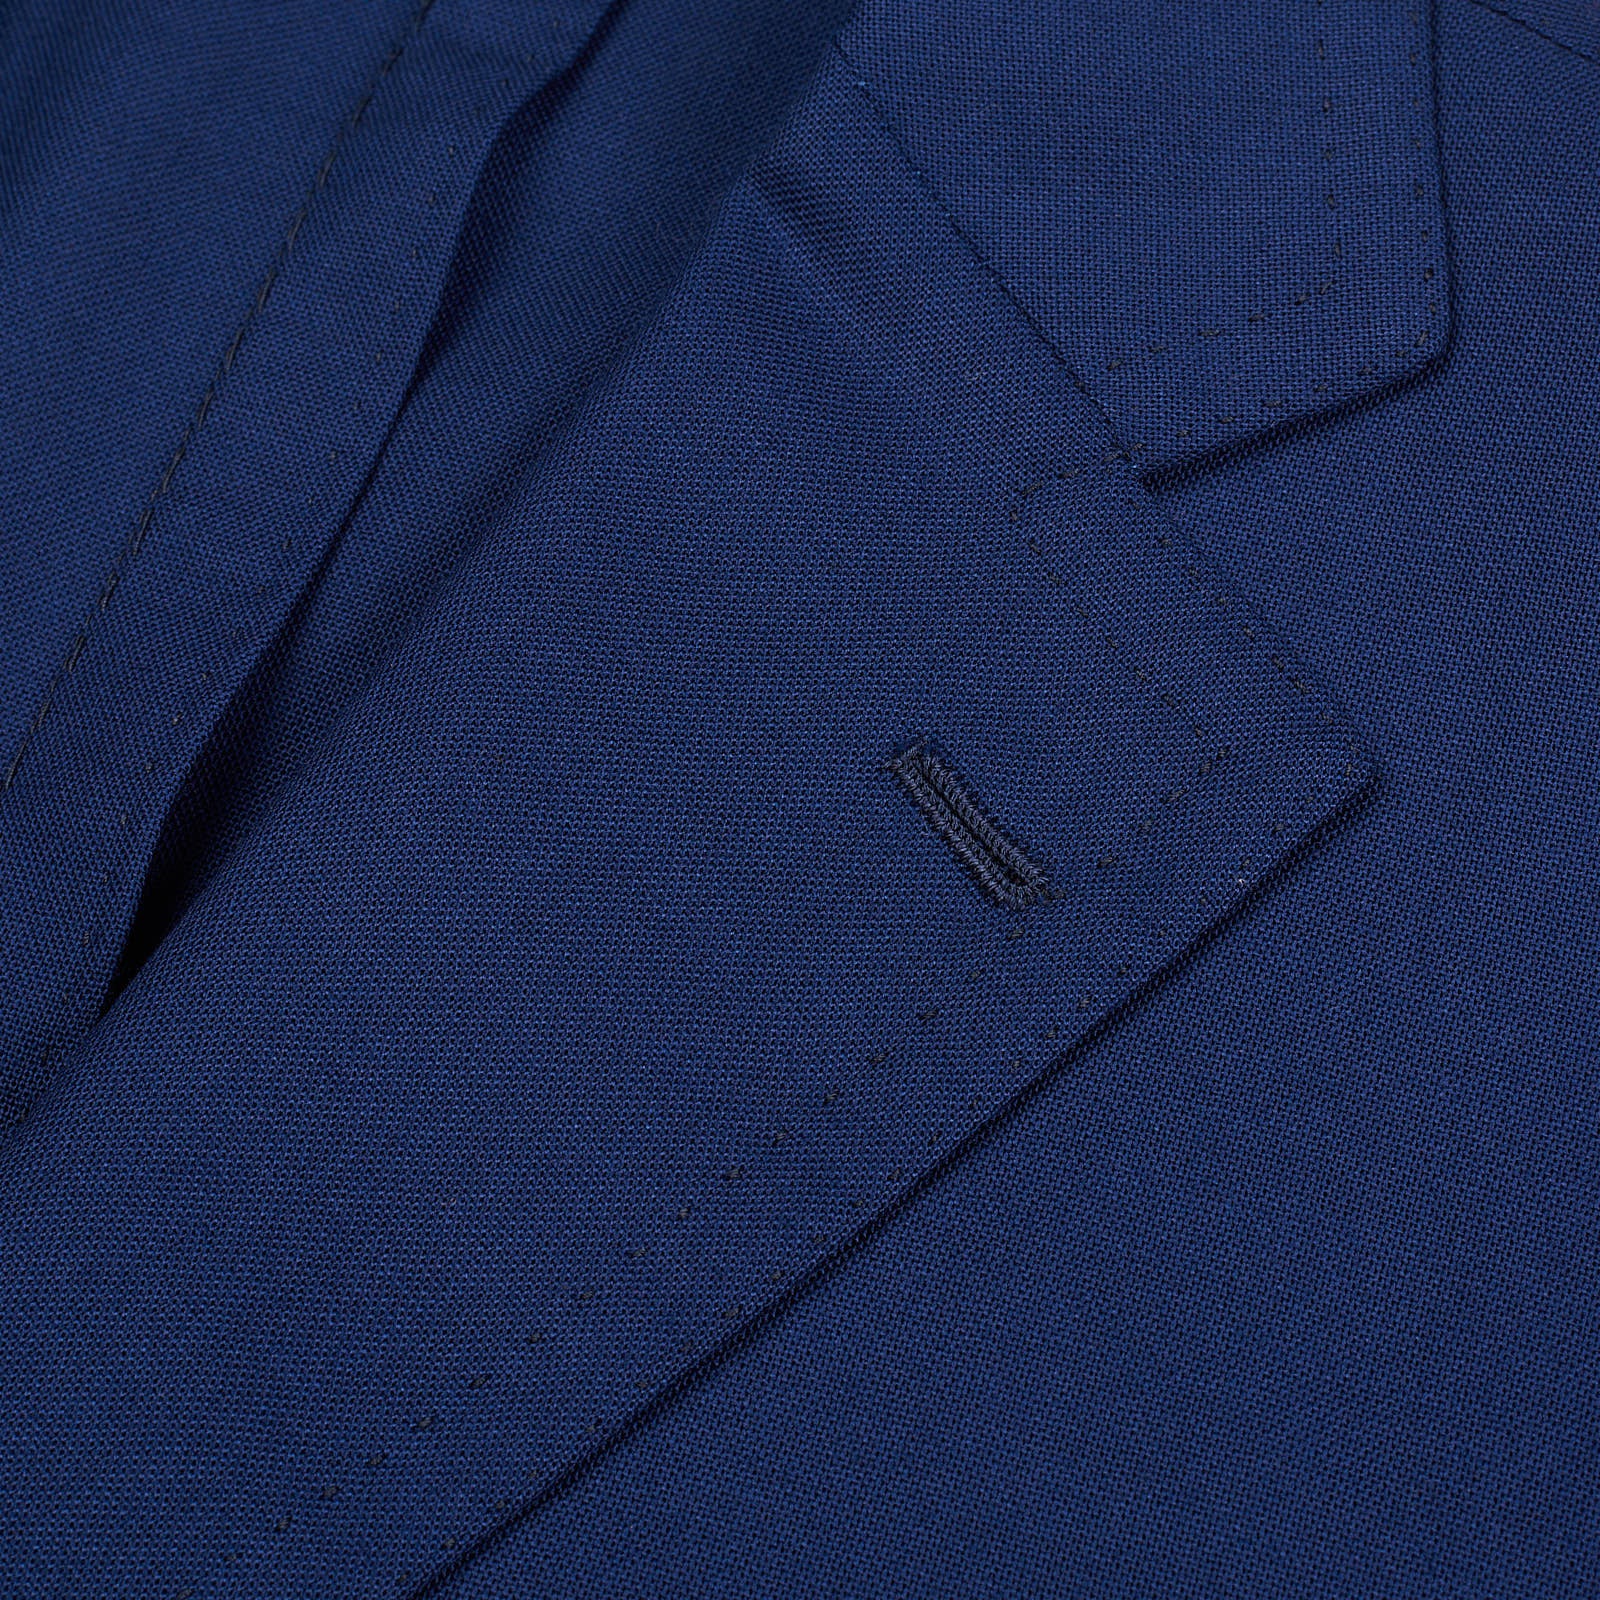 CESARE ATTOLINI for M.BARDELLI Handmade Blue Wool Jacket EU 50 NEW US 40